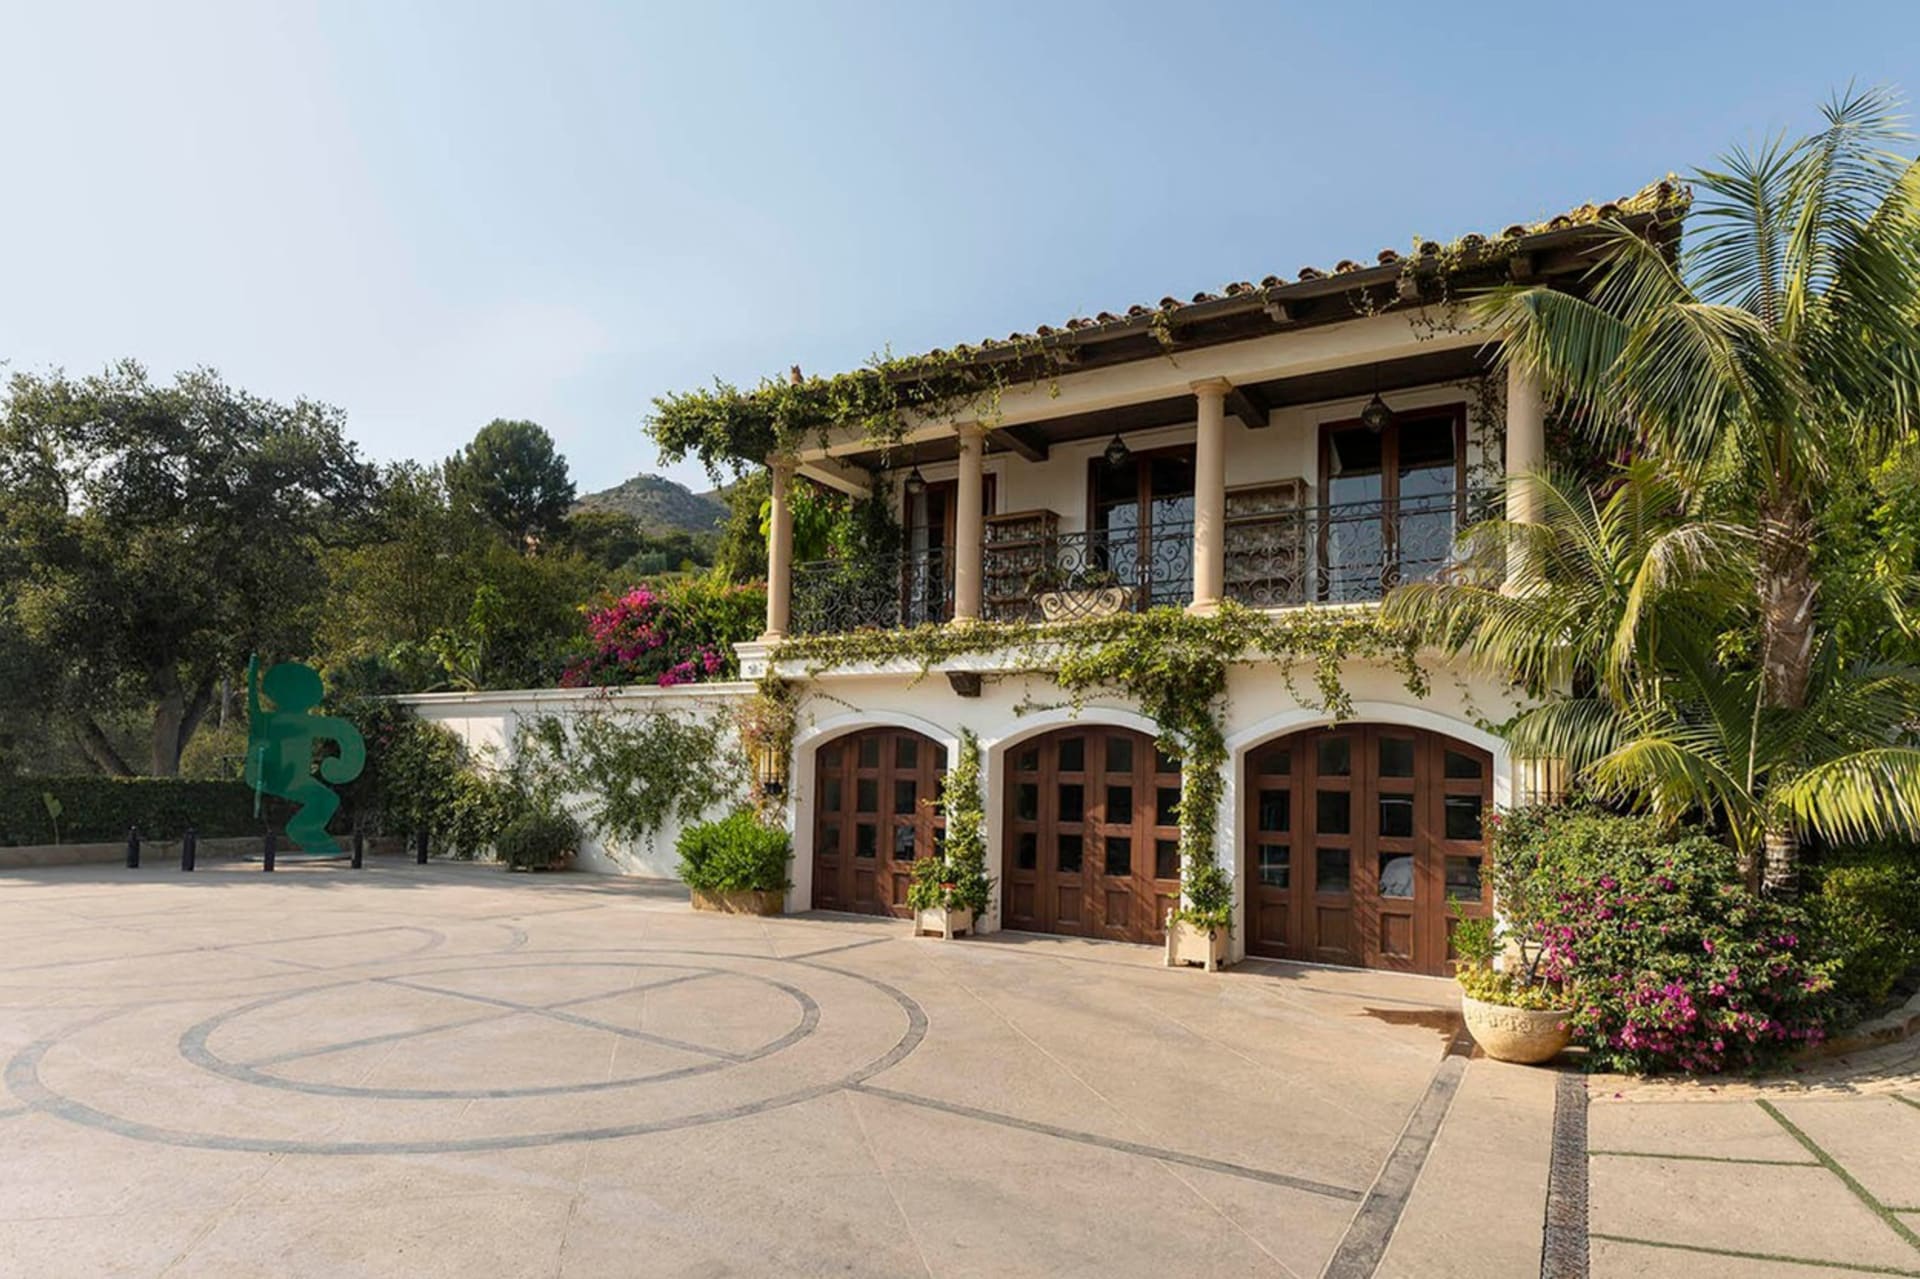 Dům v Montecitu, ve kterém princ Harry a Meghan natáčeli svůj dokument pro Netflix.